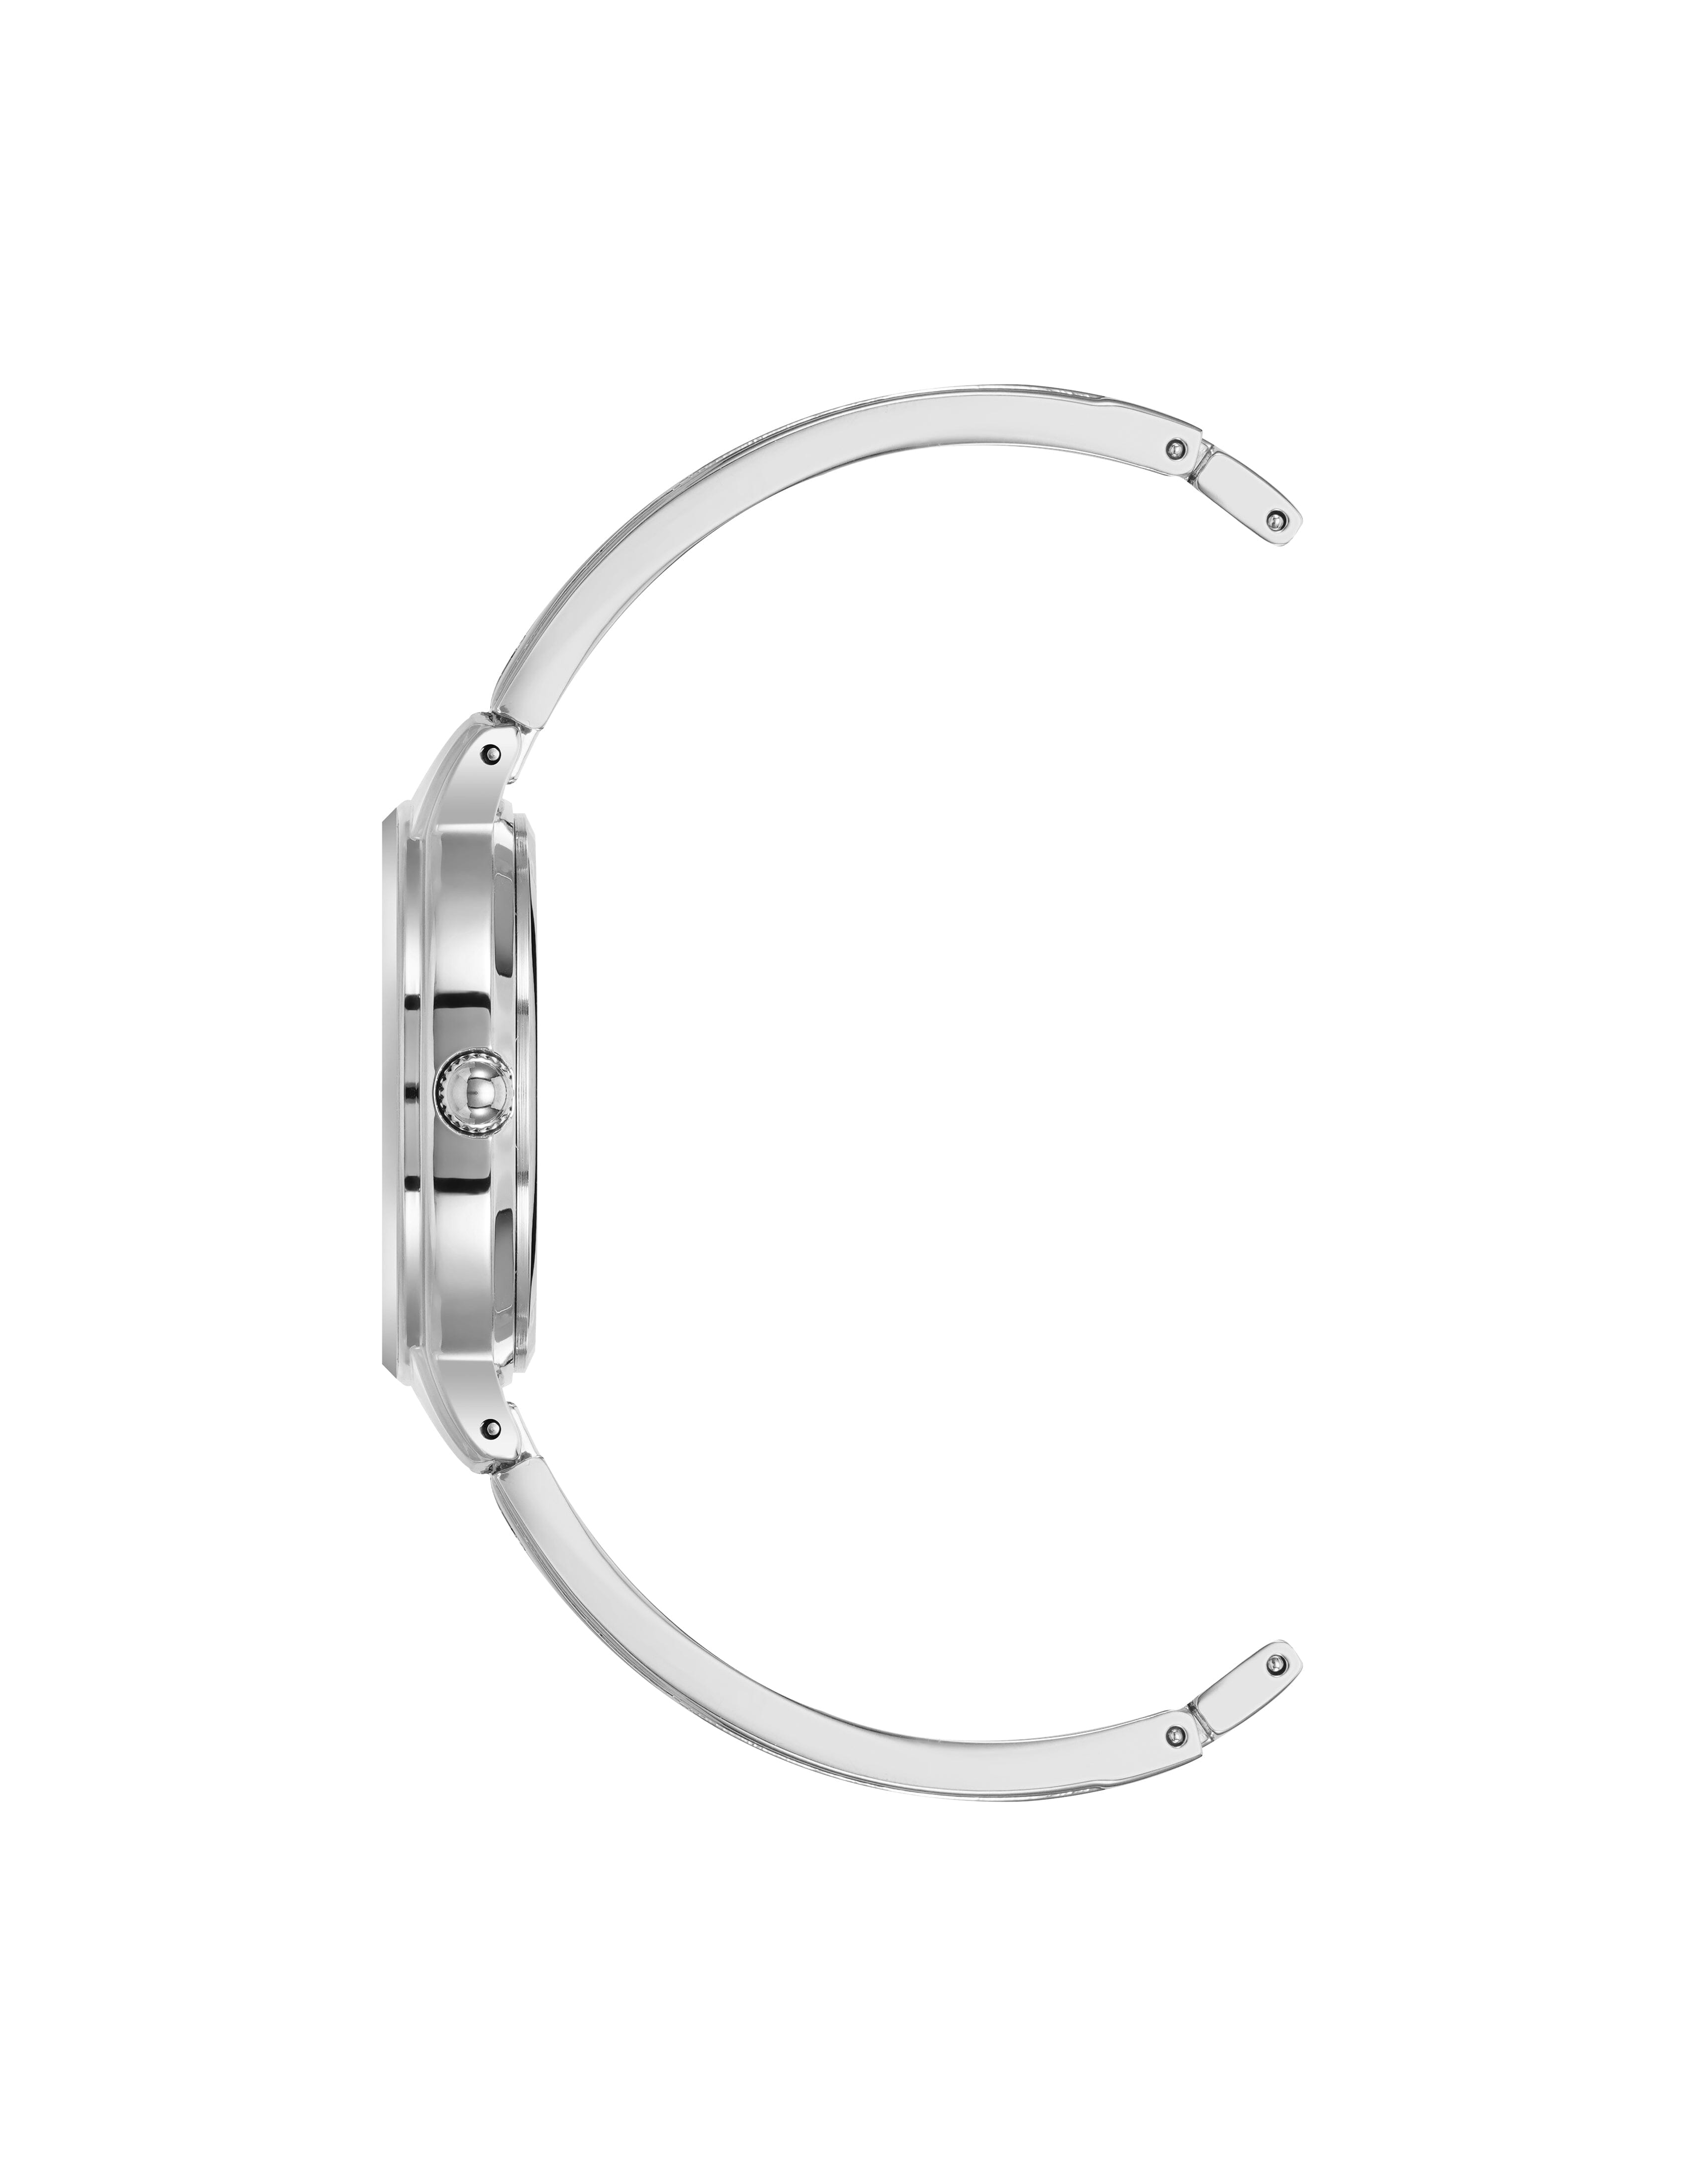 Anne Klein Women's Diamond Accented Open Bangle Watch in Silver-Tone/Burgundy